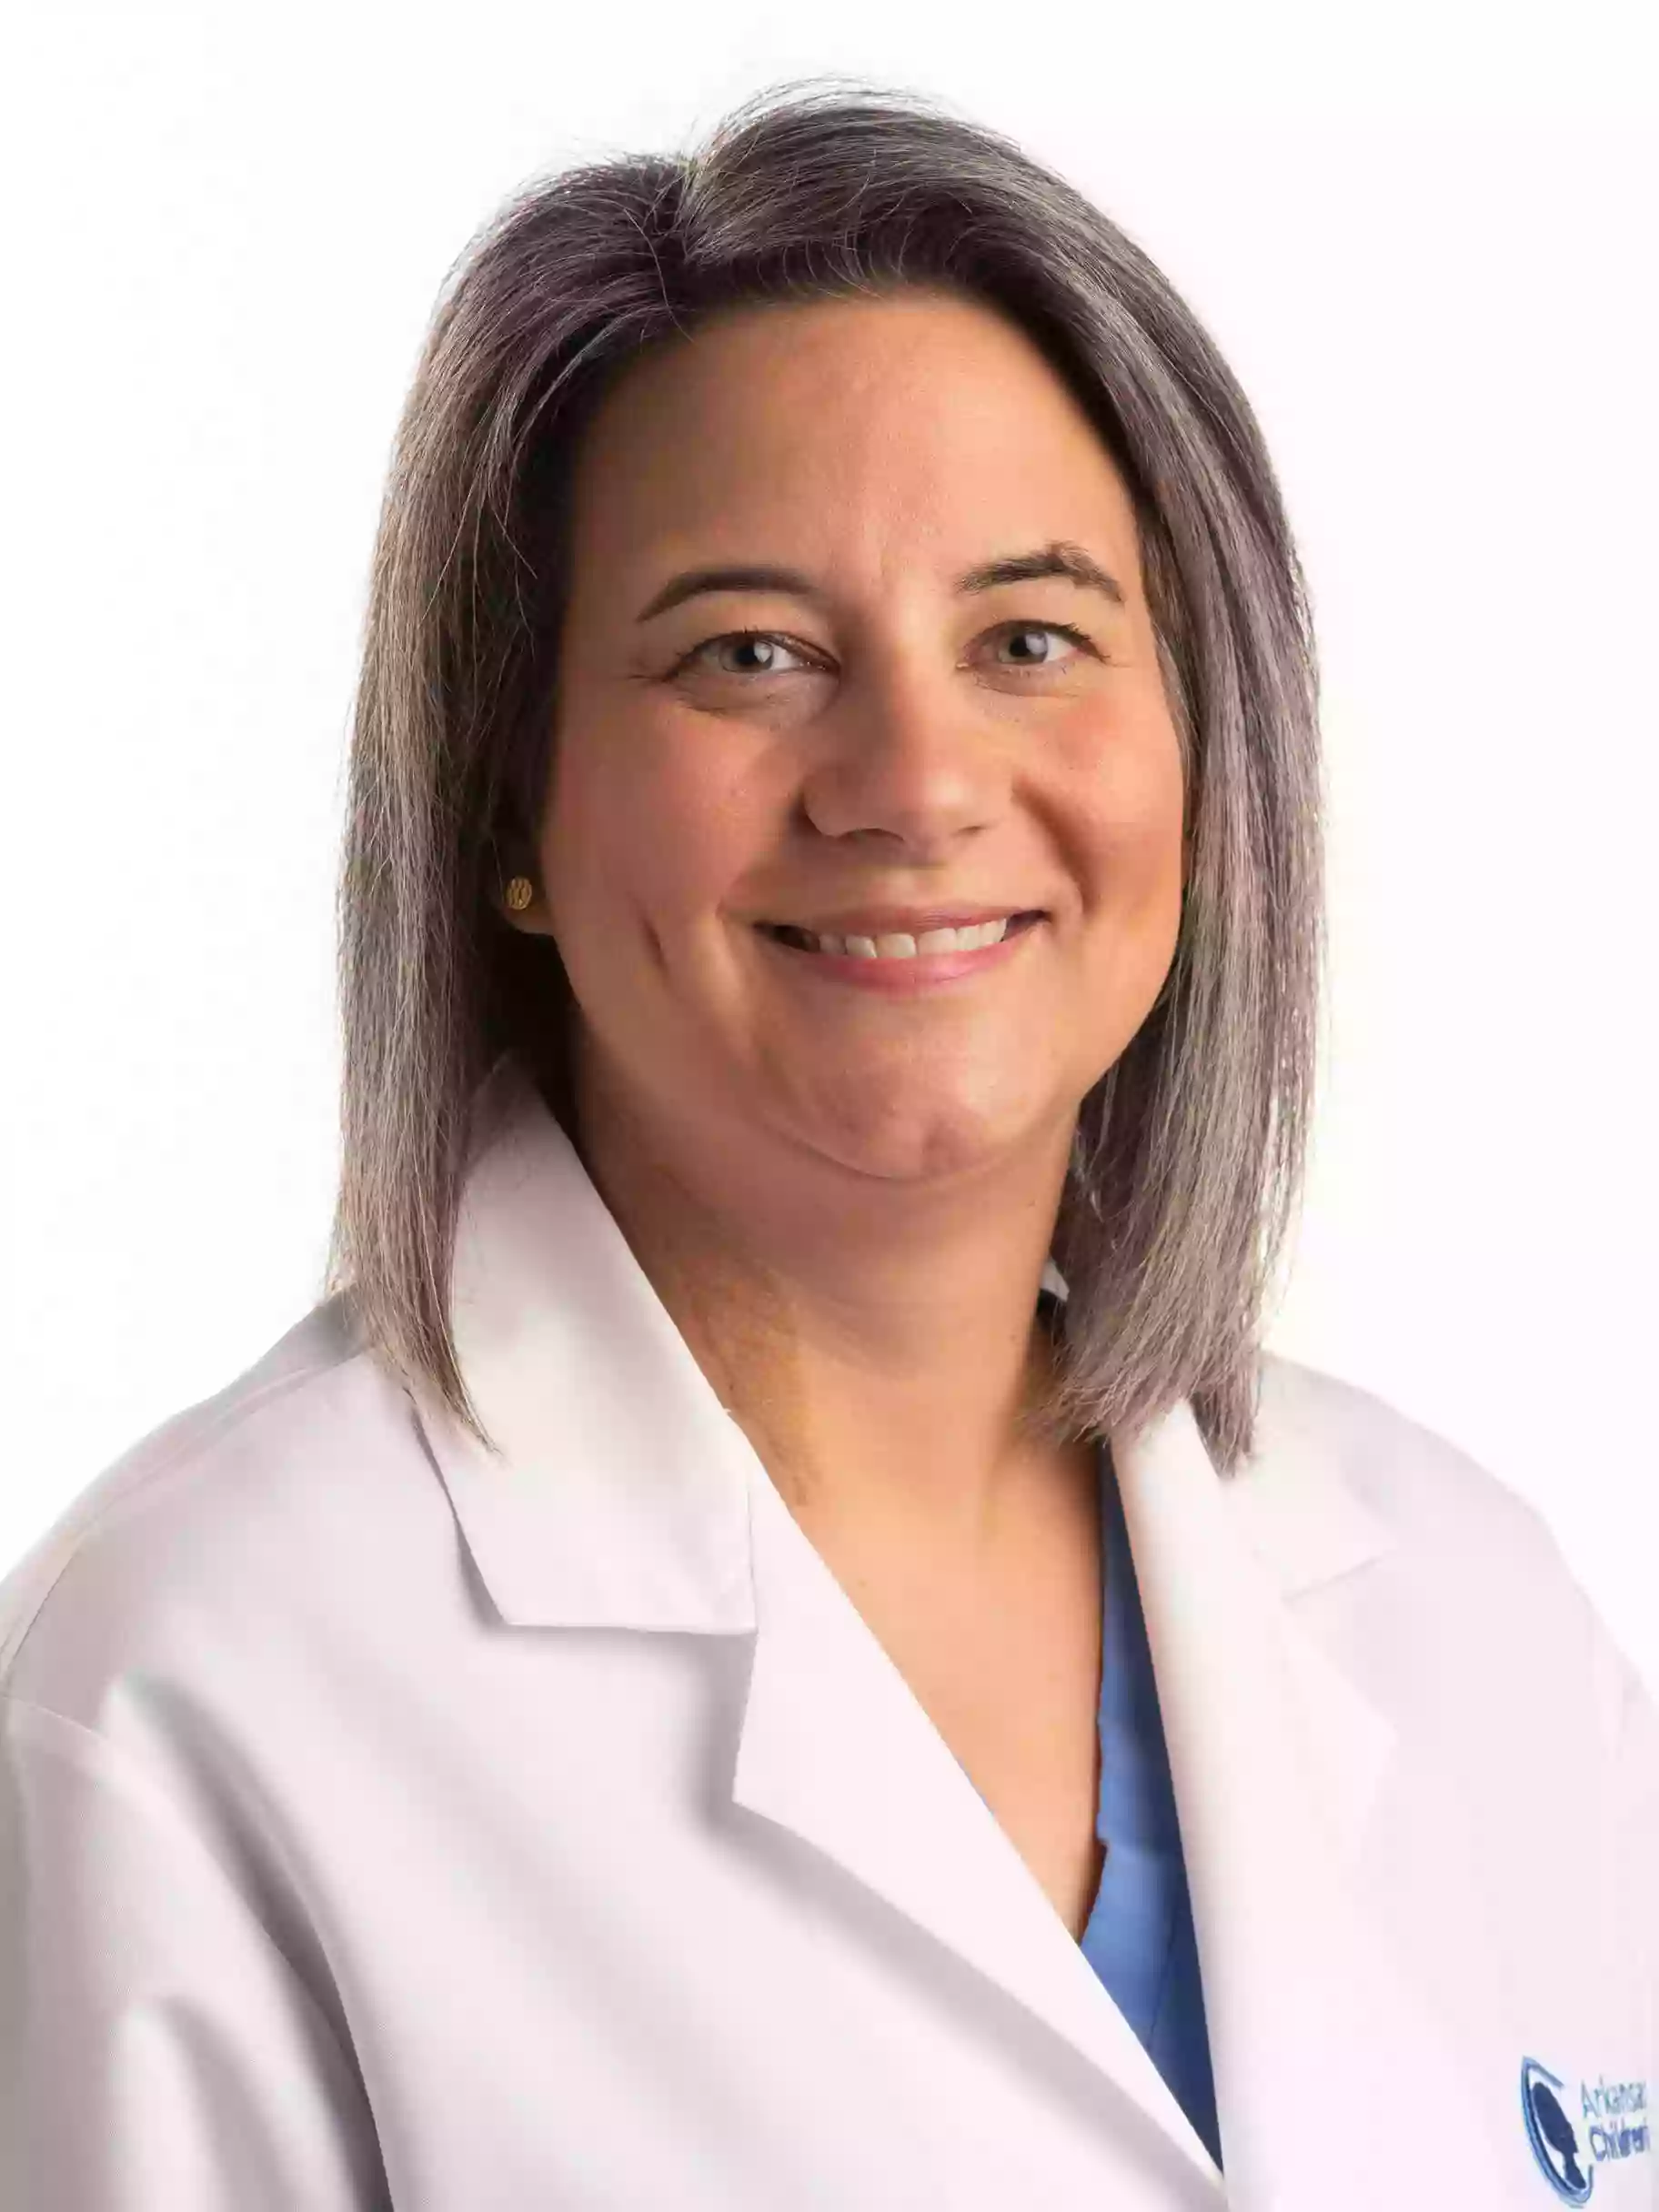 UAMS Health - Jessica B. Beavers, M.D.